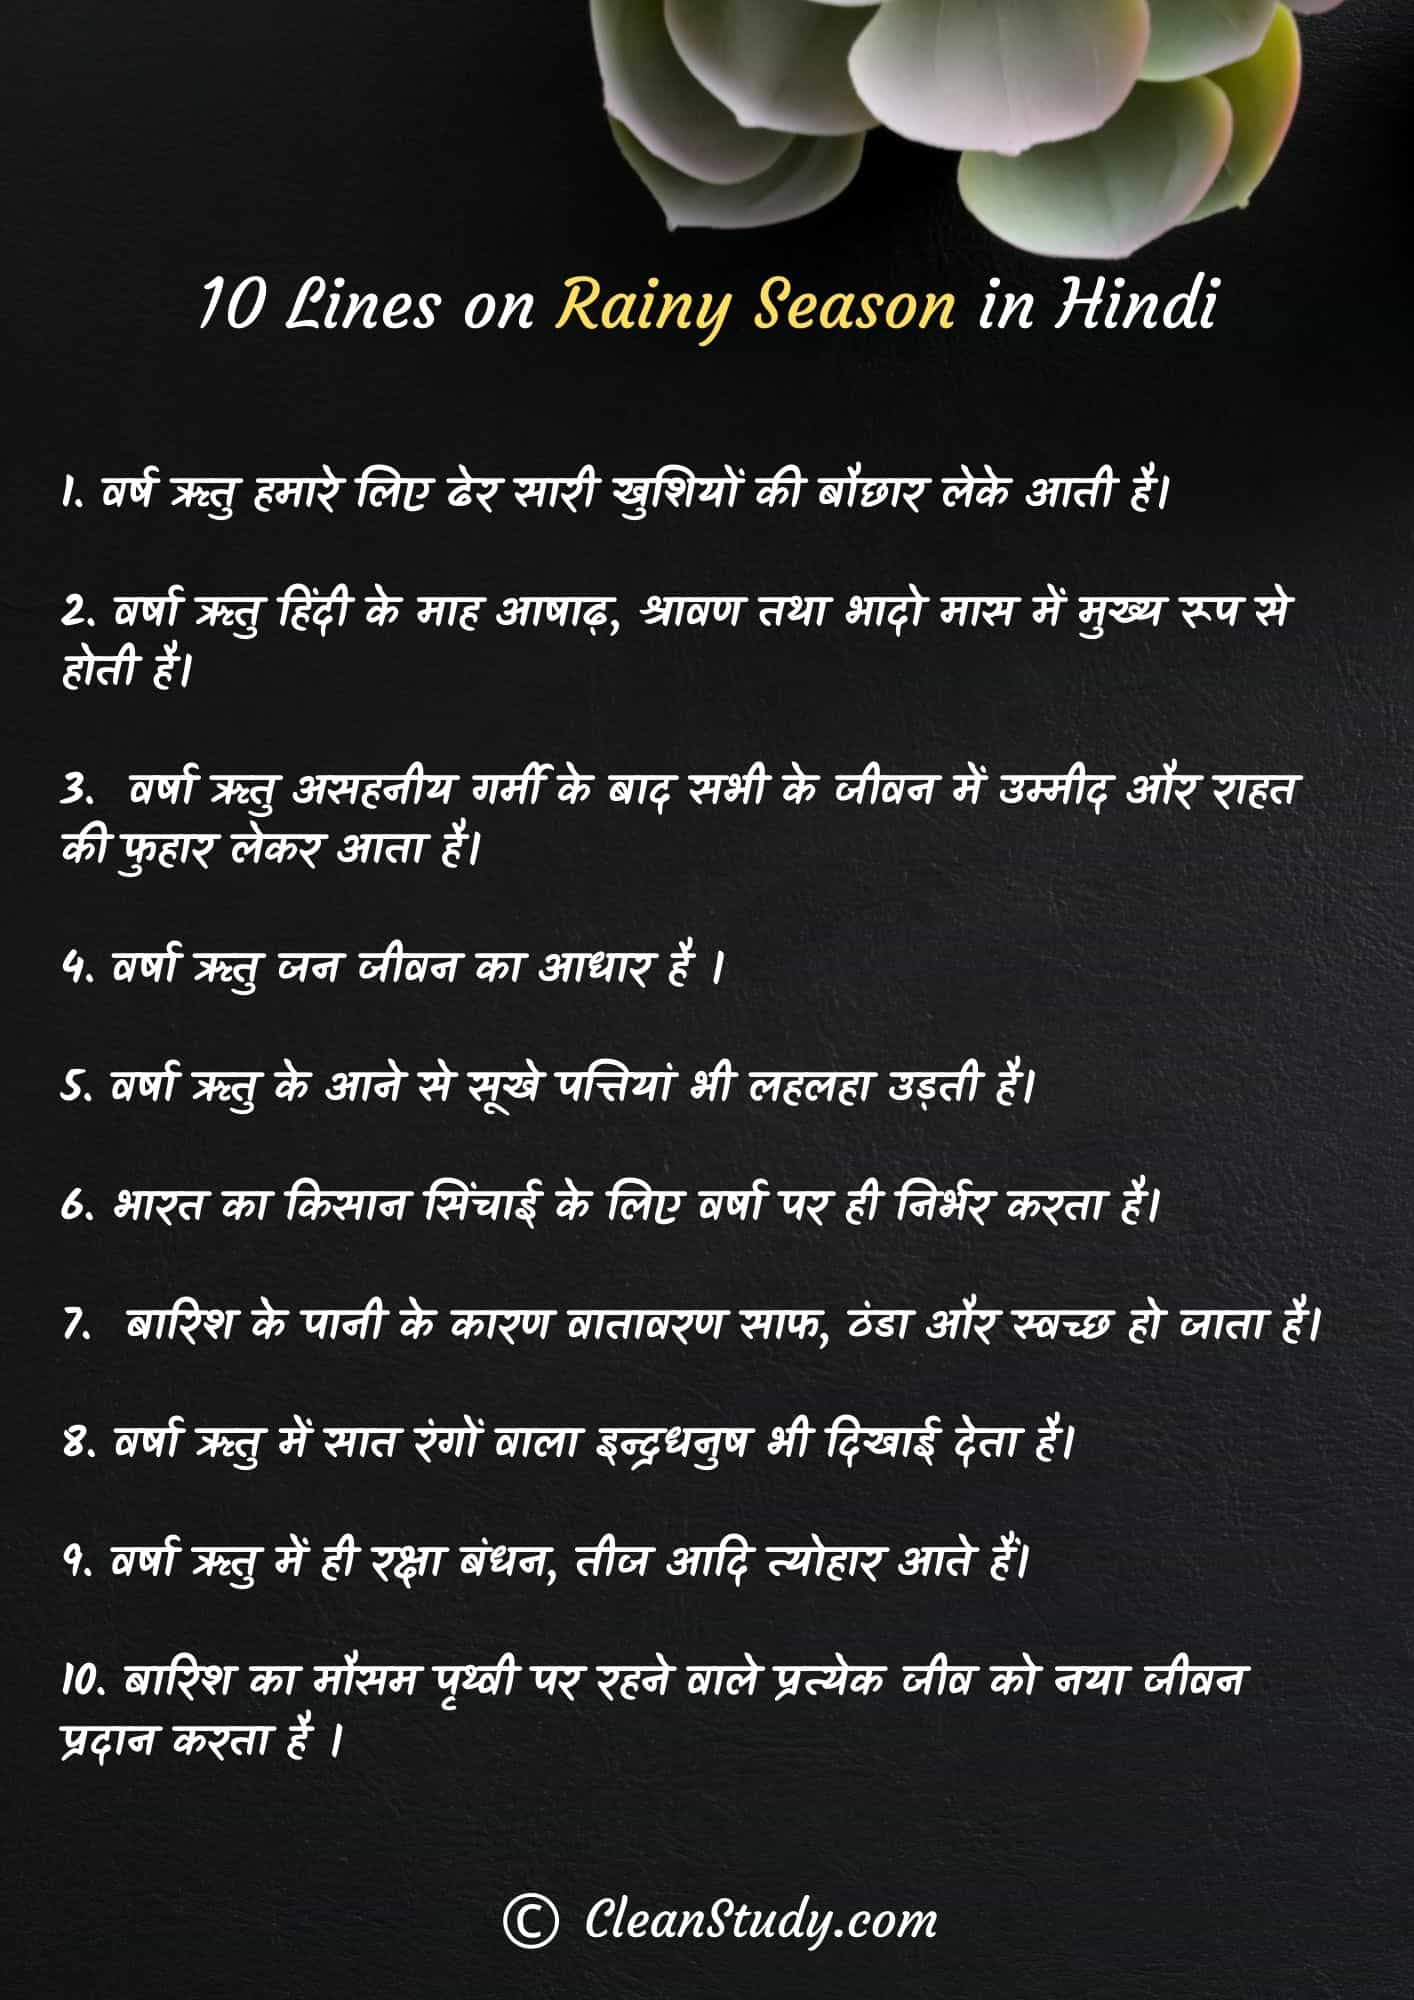 10 Lines on Rainy Season in Hindi